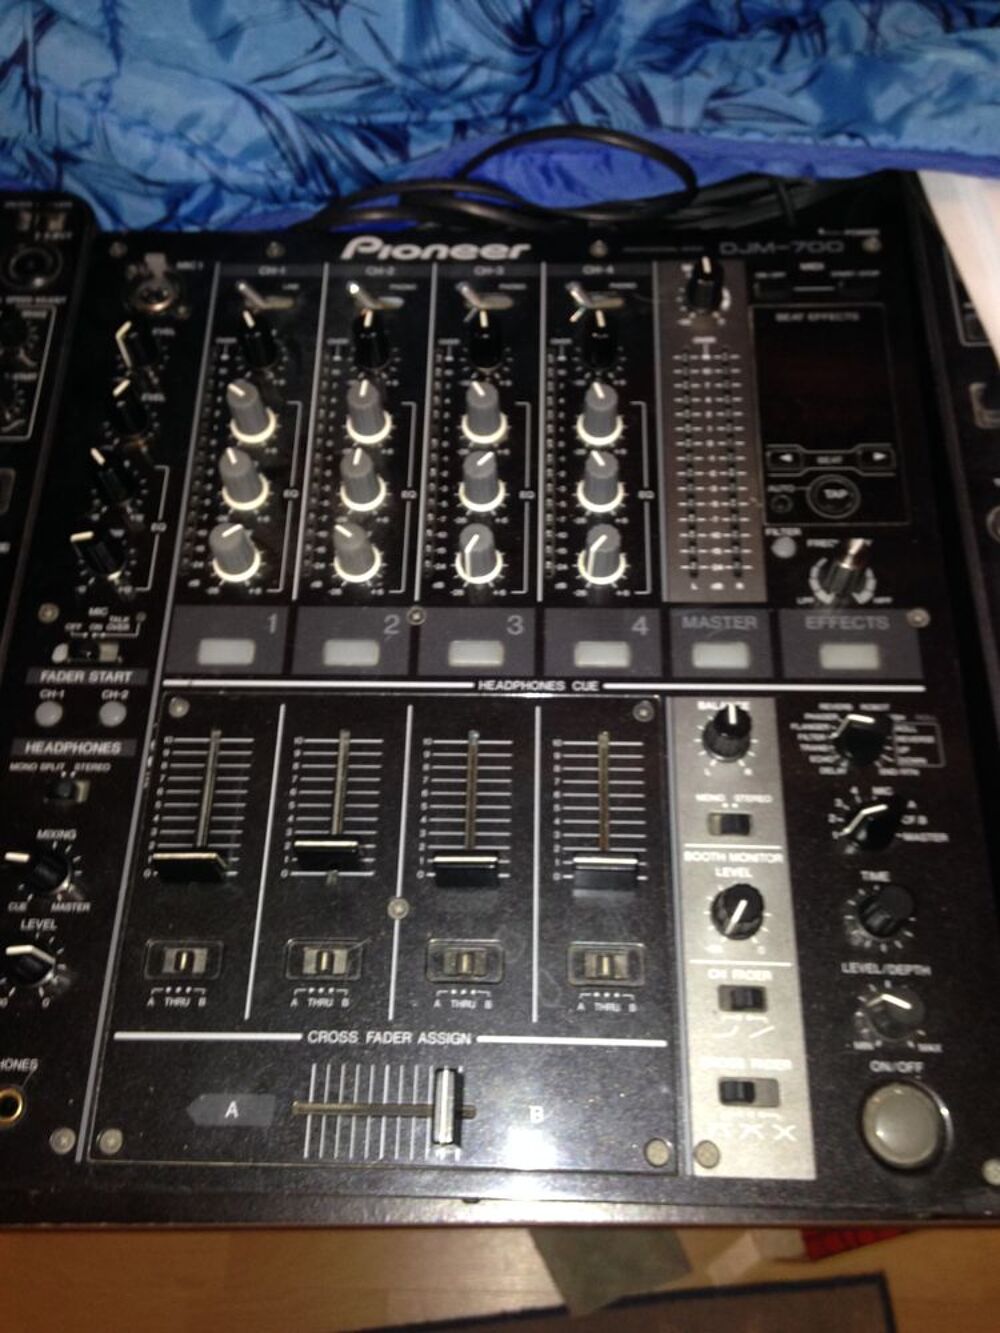  Table de mixage DJm 700 pioneer Instruments de musique